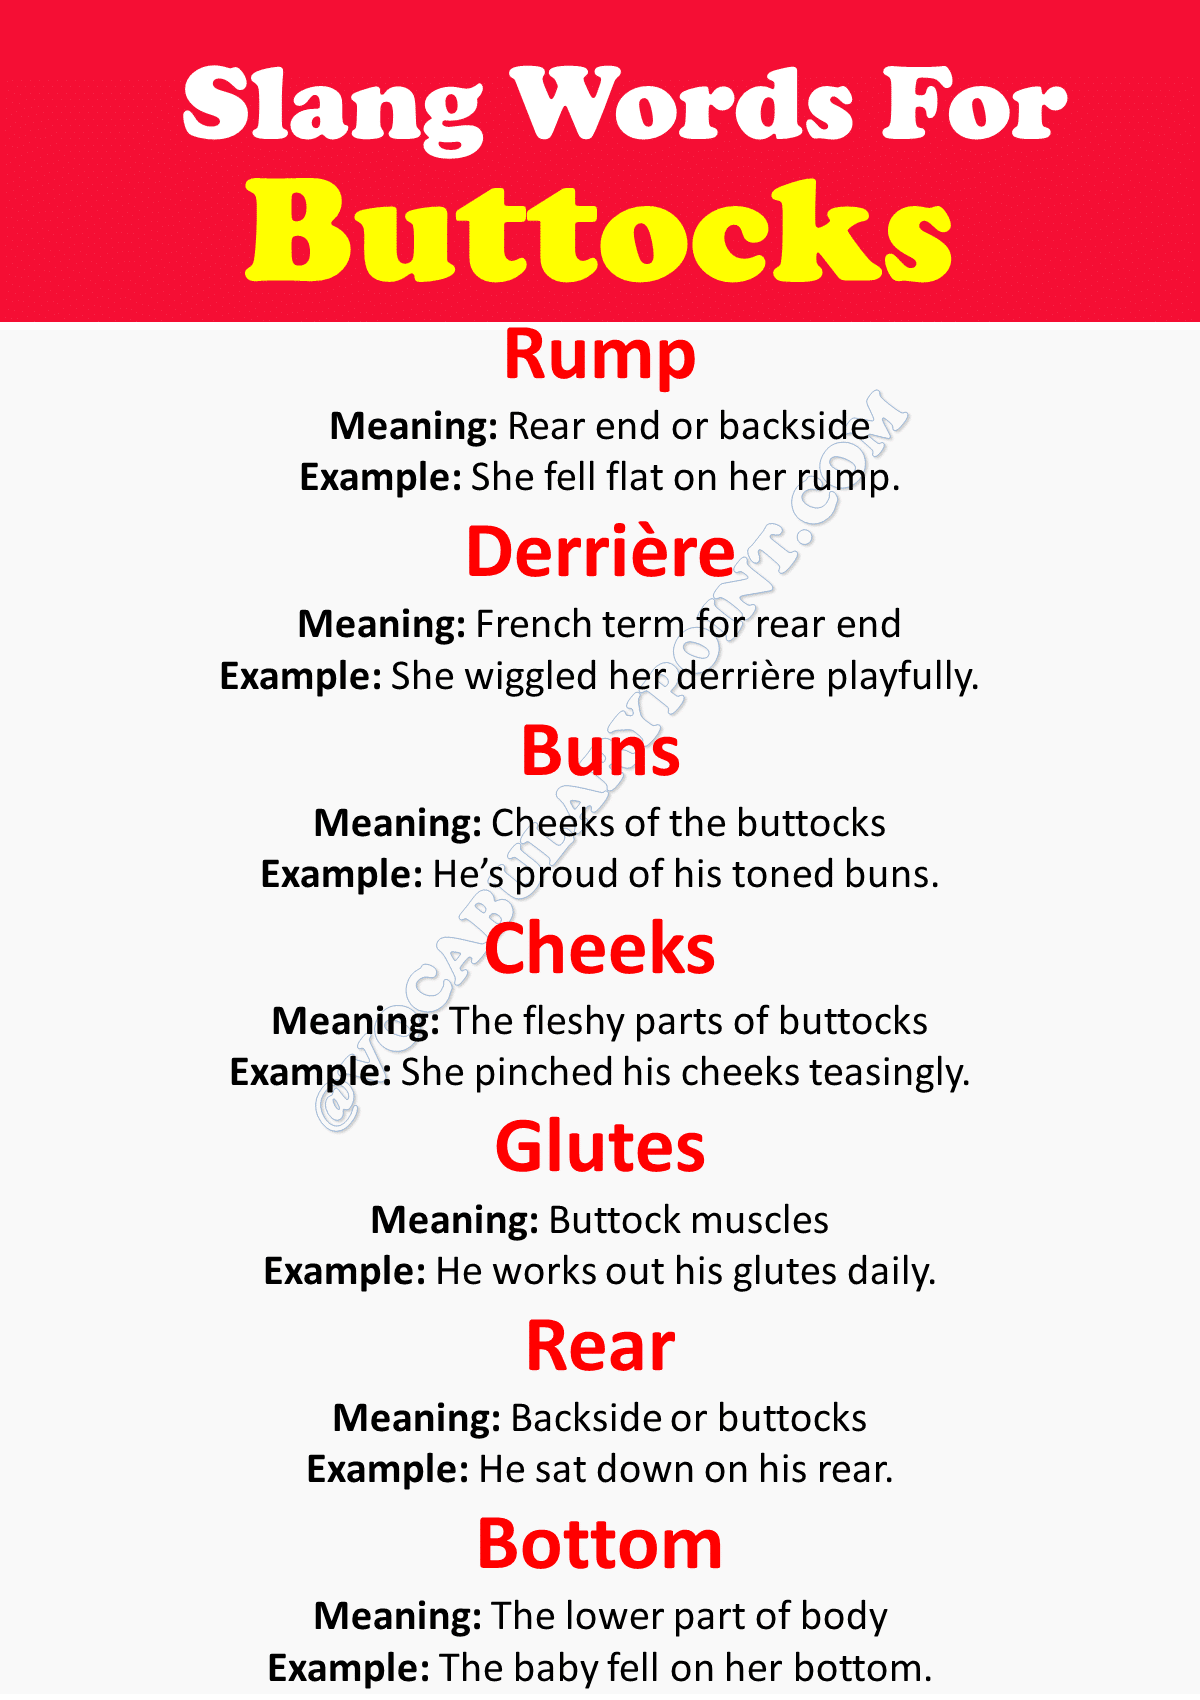 Slang Words For Buttocks